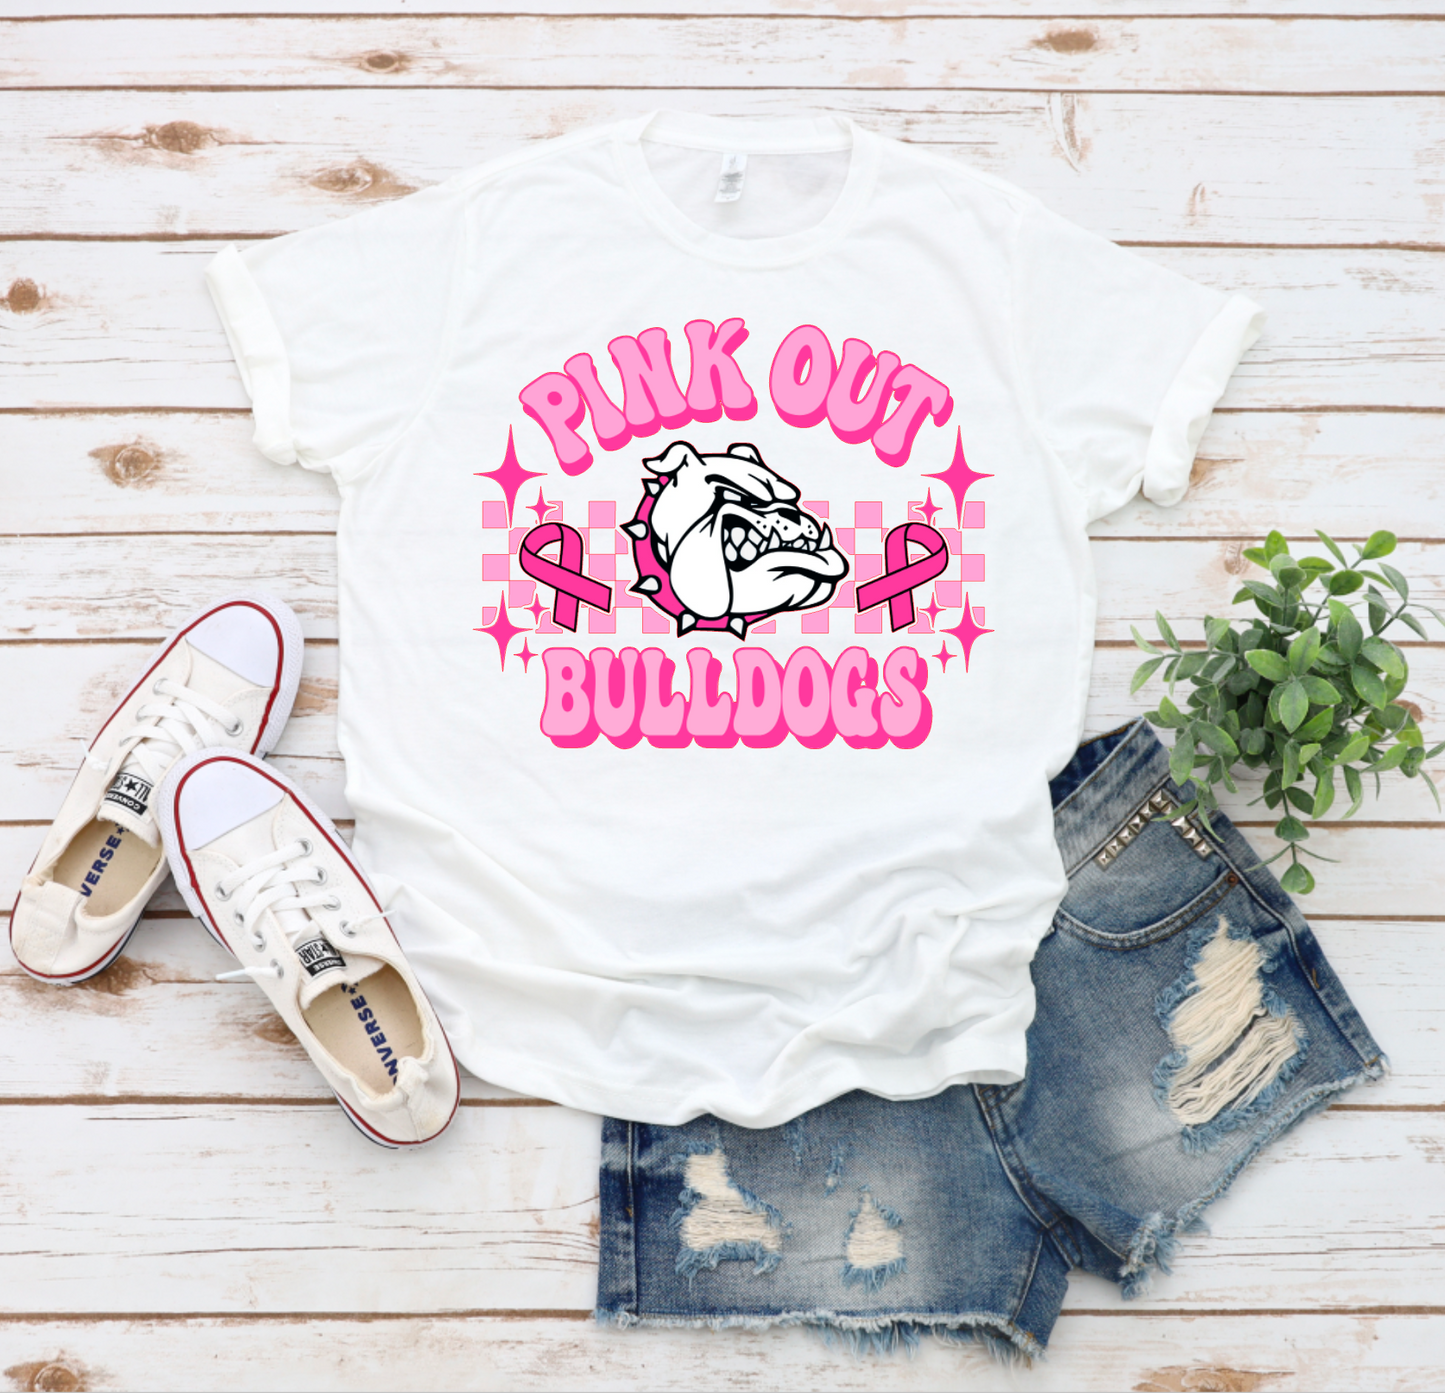 Pink Out Bulldogs || Breast Cancer Awareness Bulldog Shirt